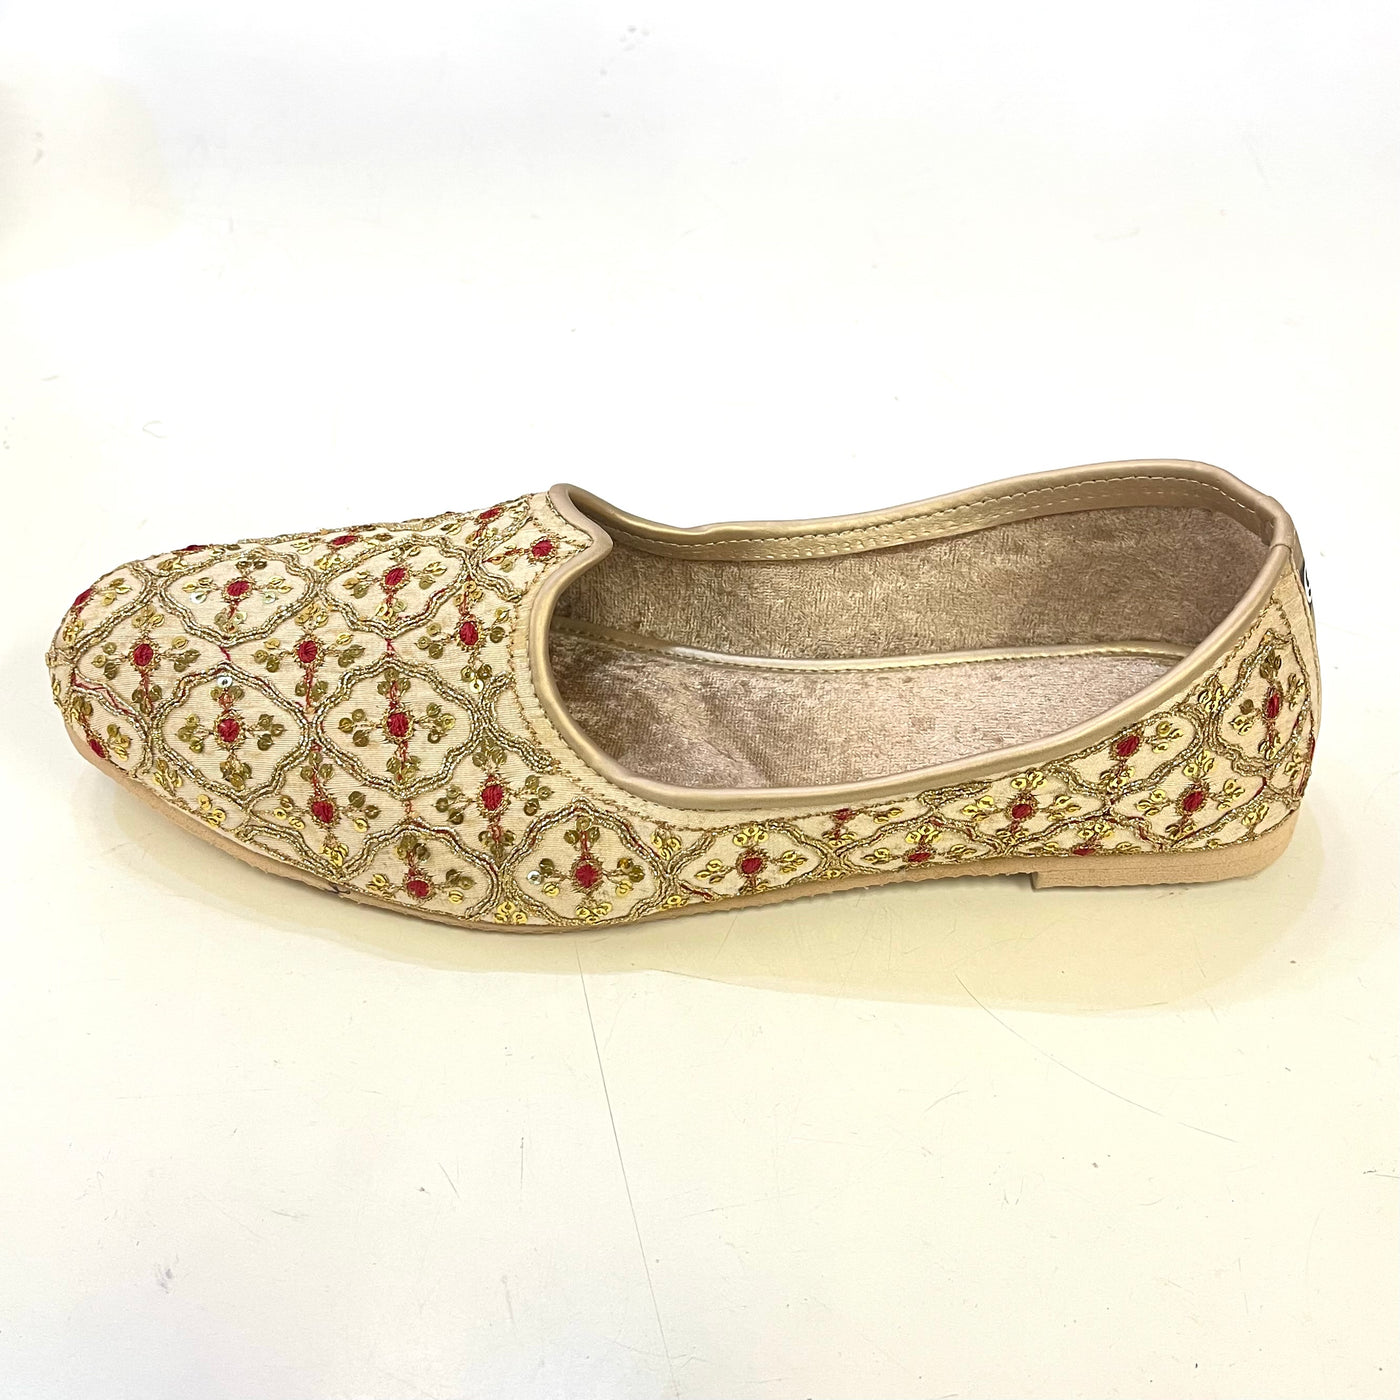 Jutti for Men's Mens Mojari Indian Shoes Handmade Shoes Khussa Shoes  Sherwani Shoes - Etsy